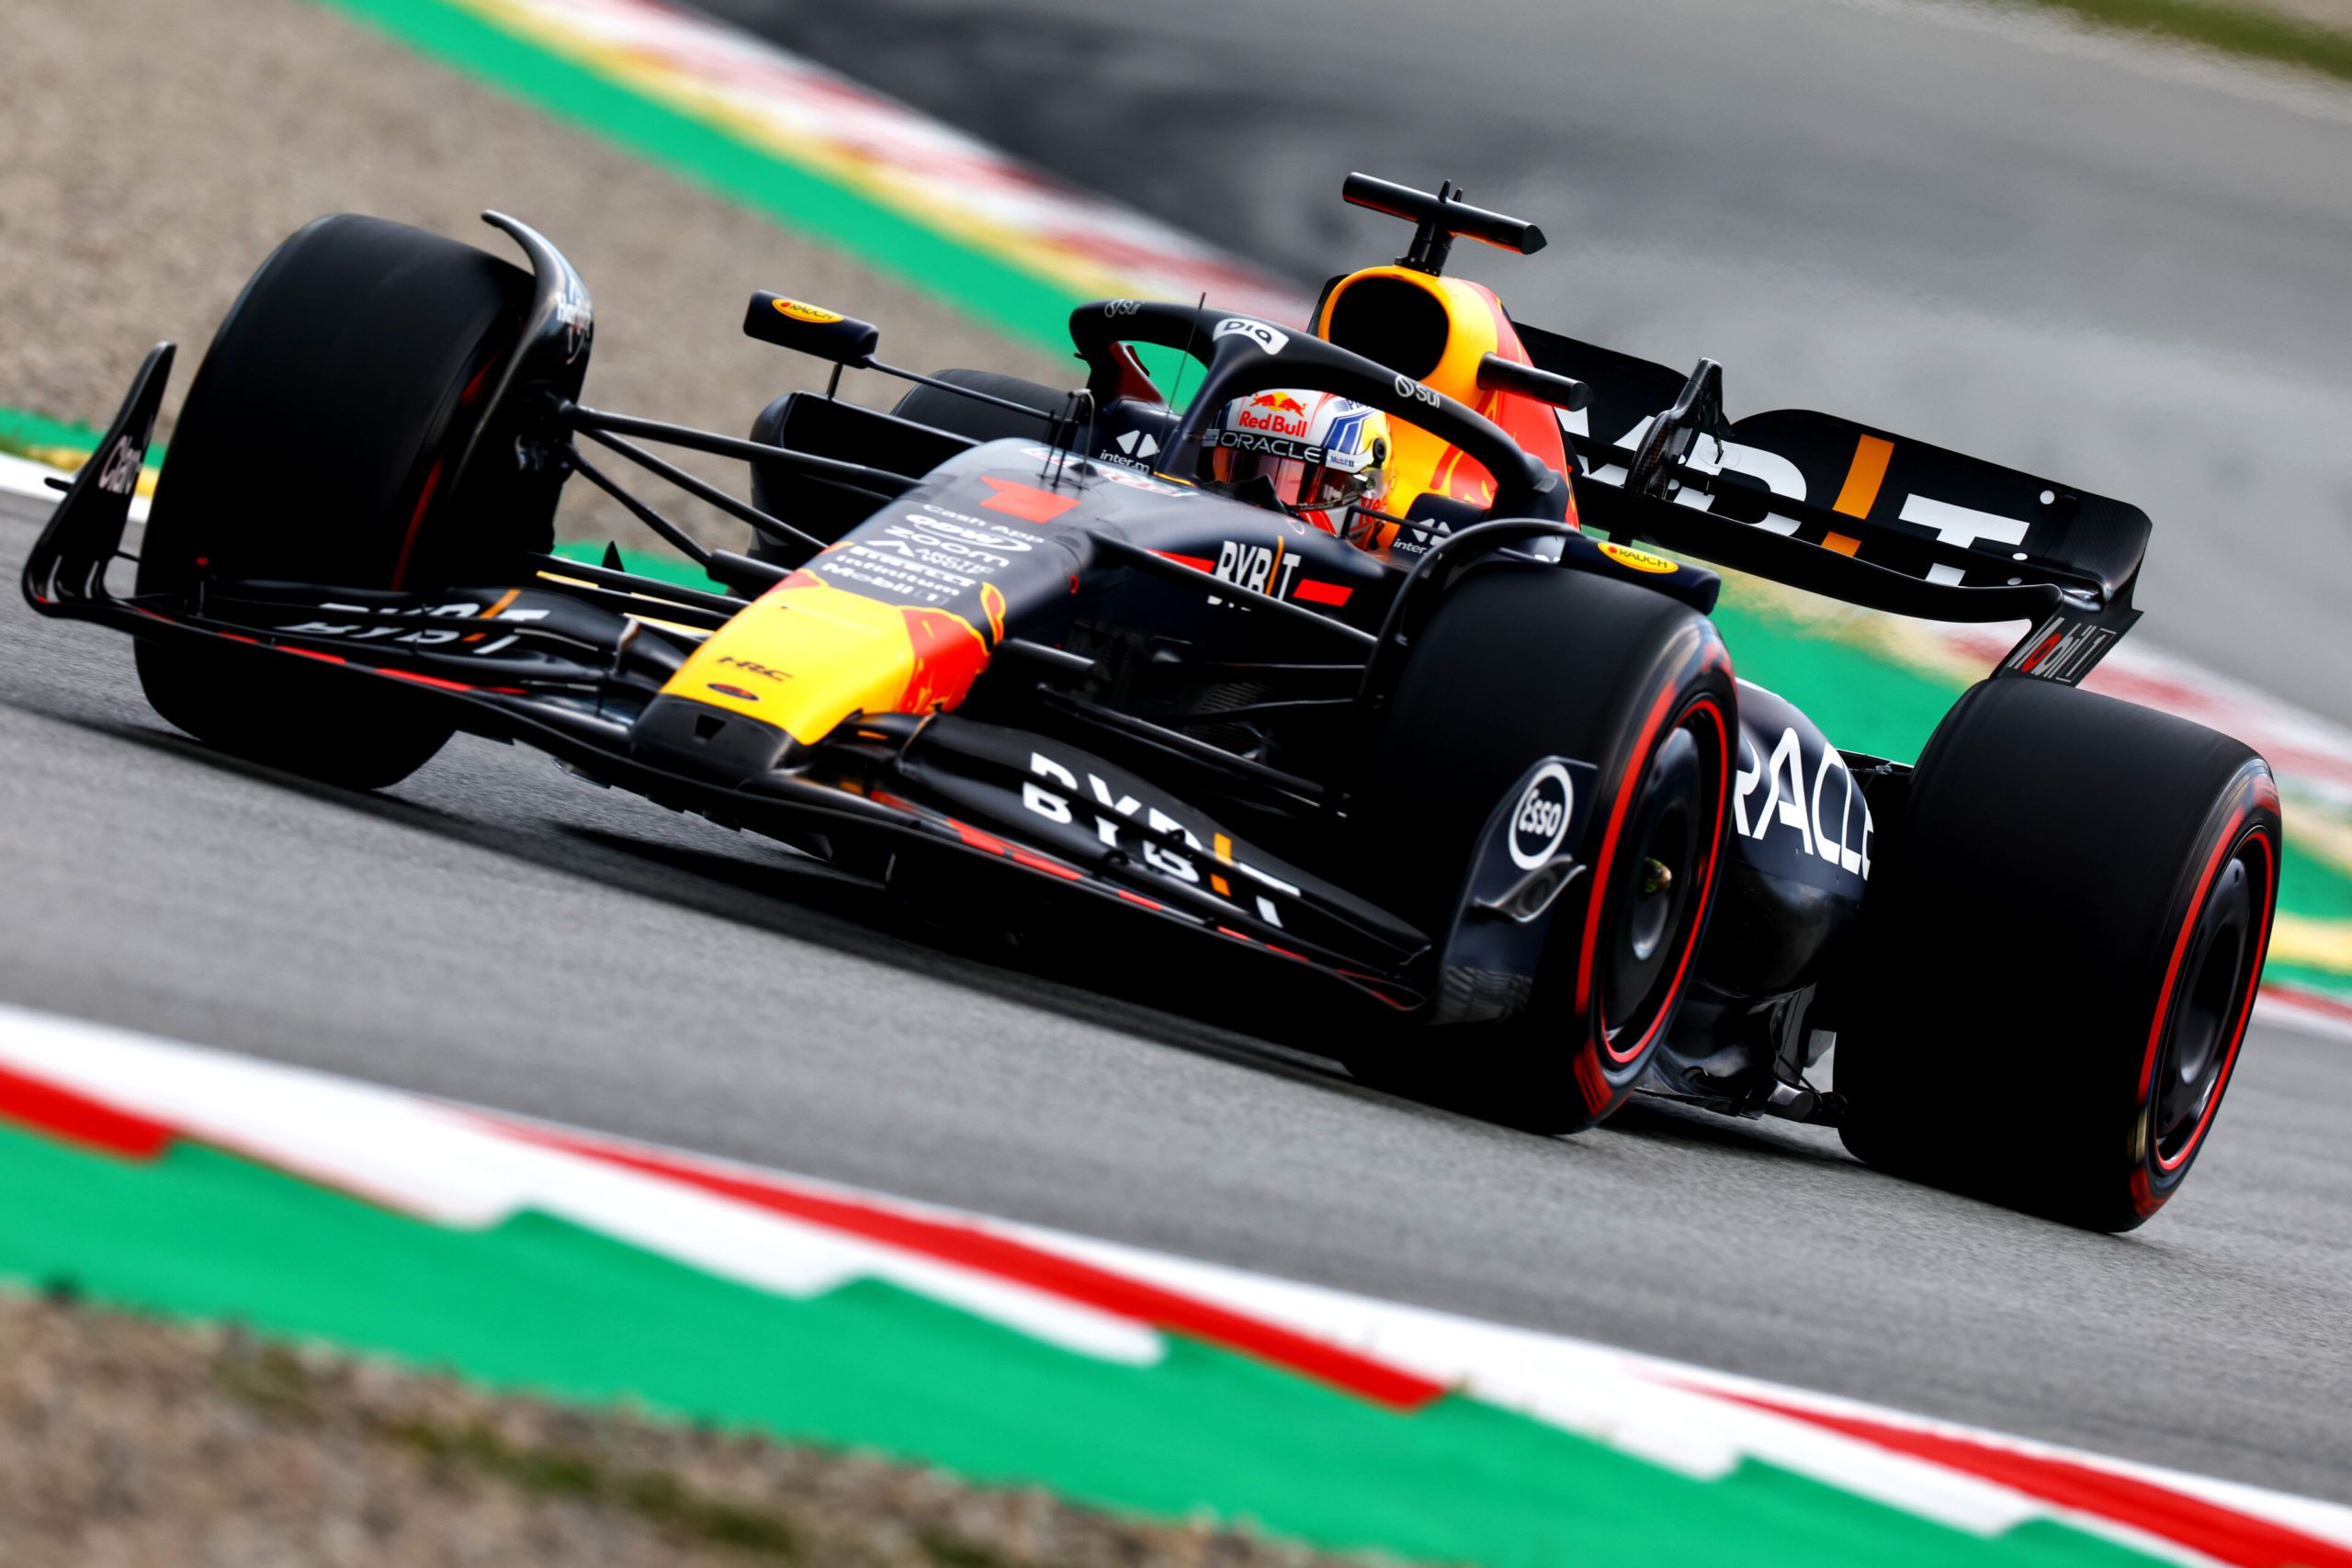 Spanish GP Verstappen fastest again in FP3 as rain hampers run